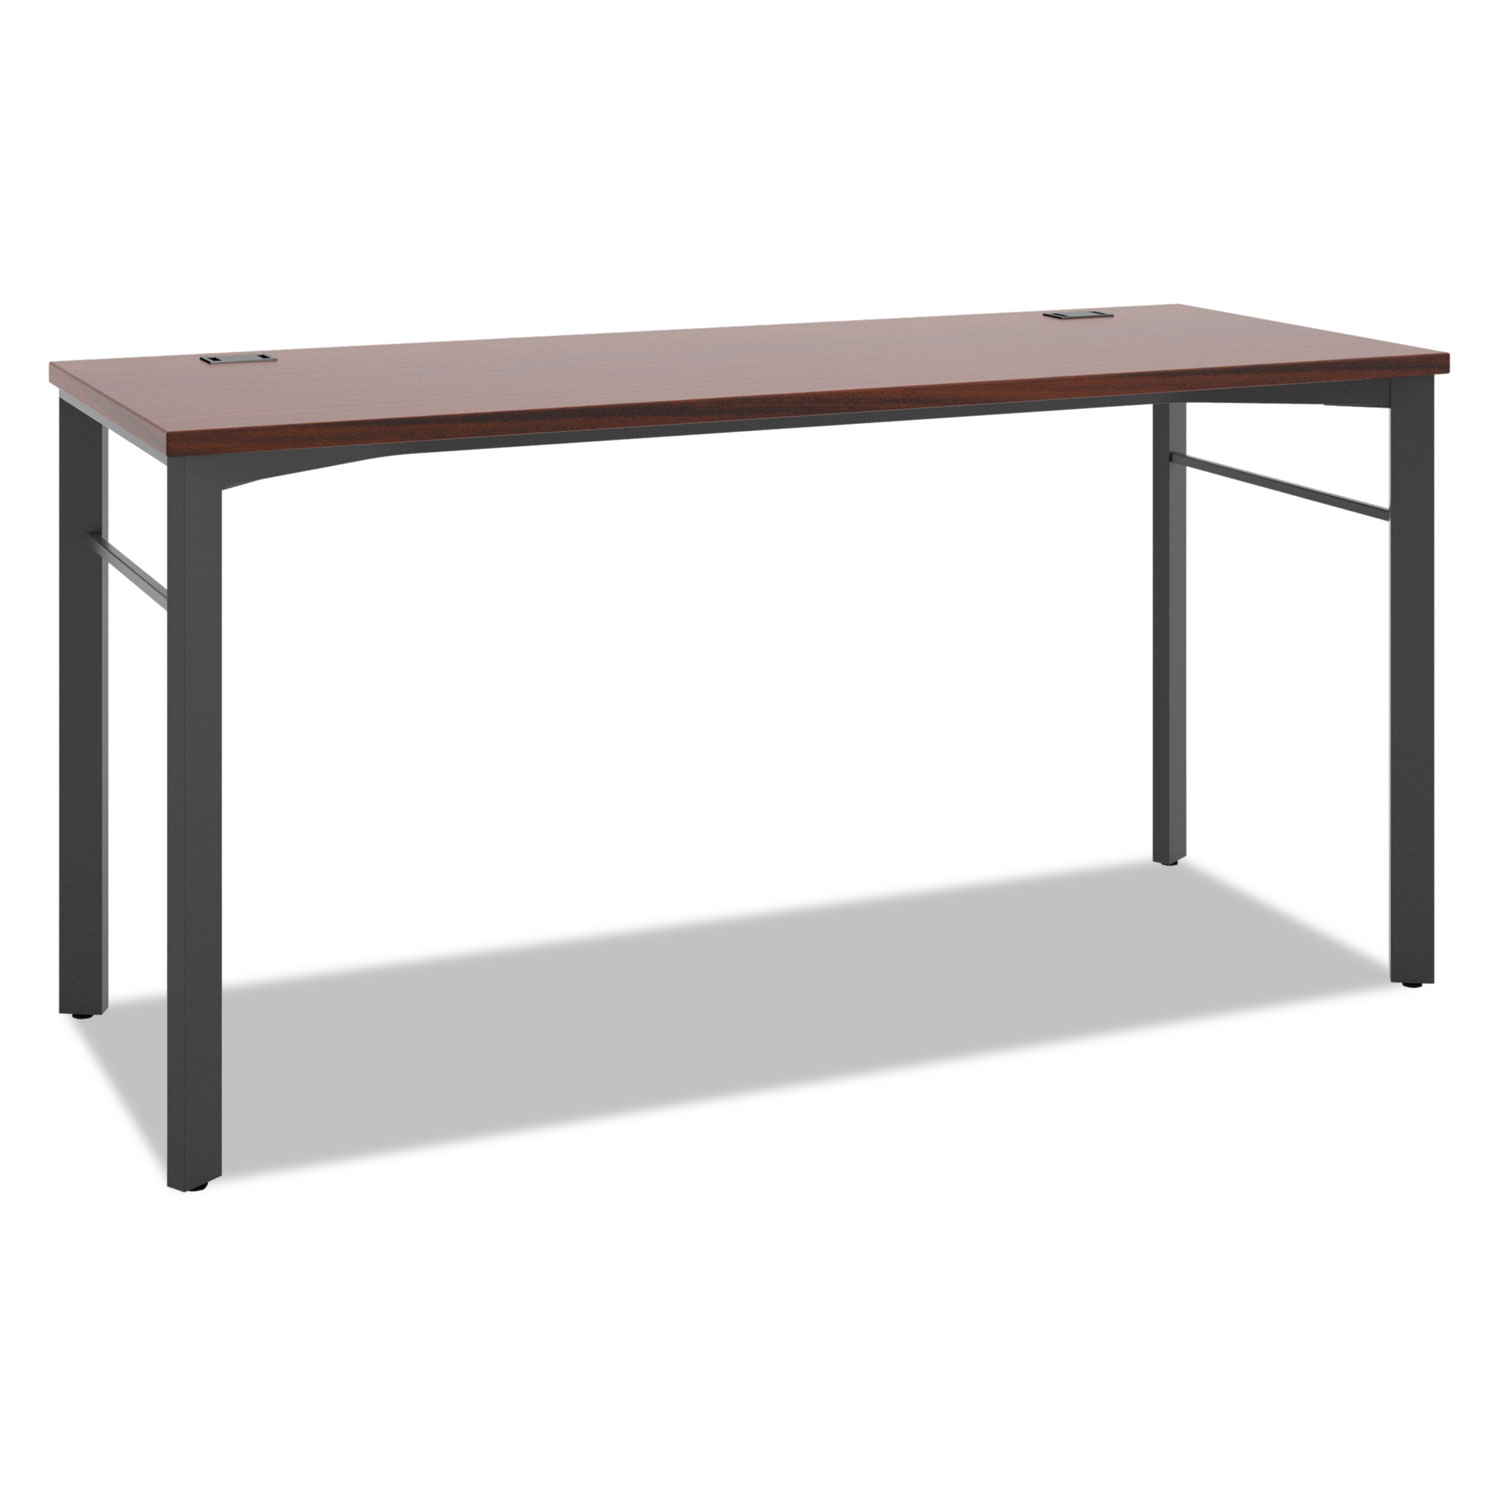 Manage Series Desk Table, 60w x 23 1/2d x 29 1/2h, Chestnut